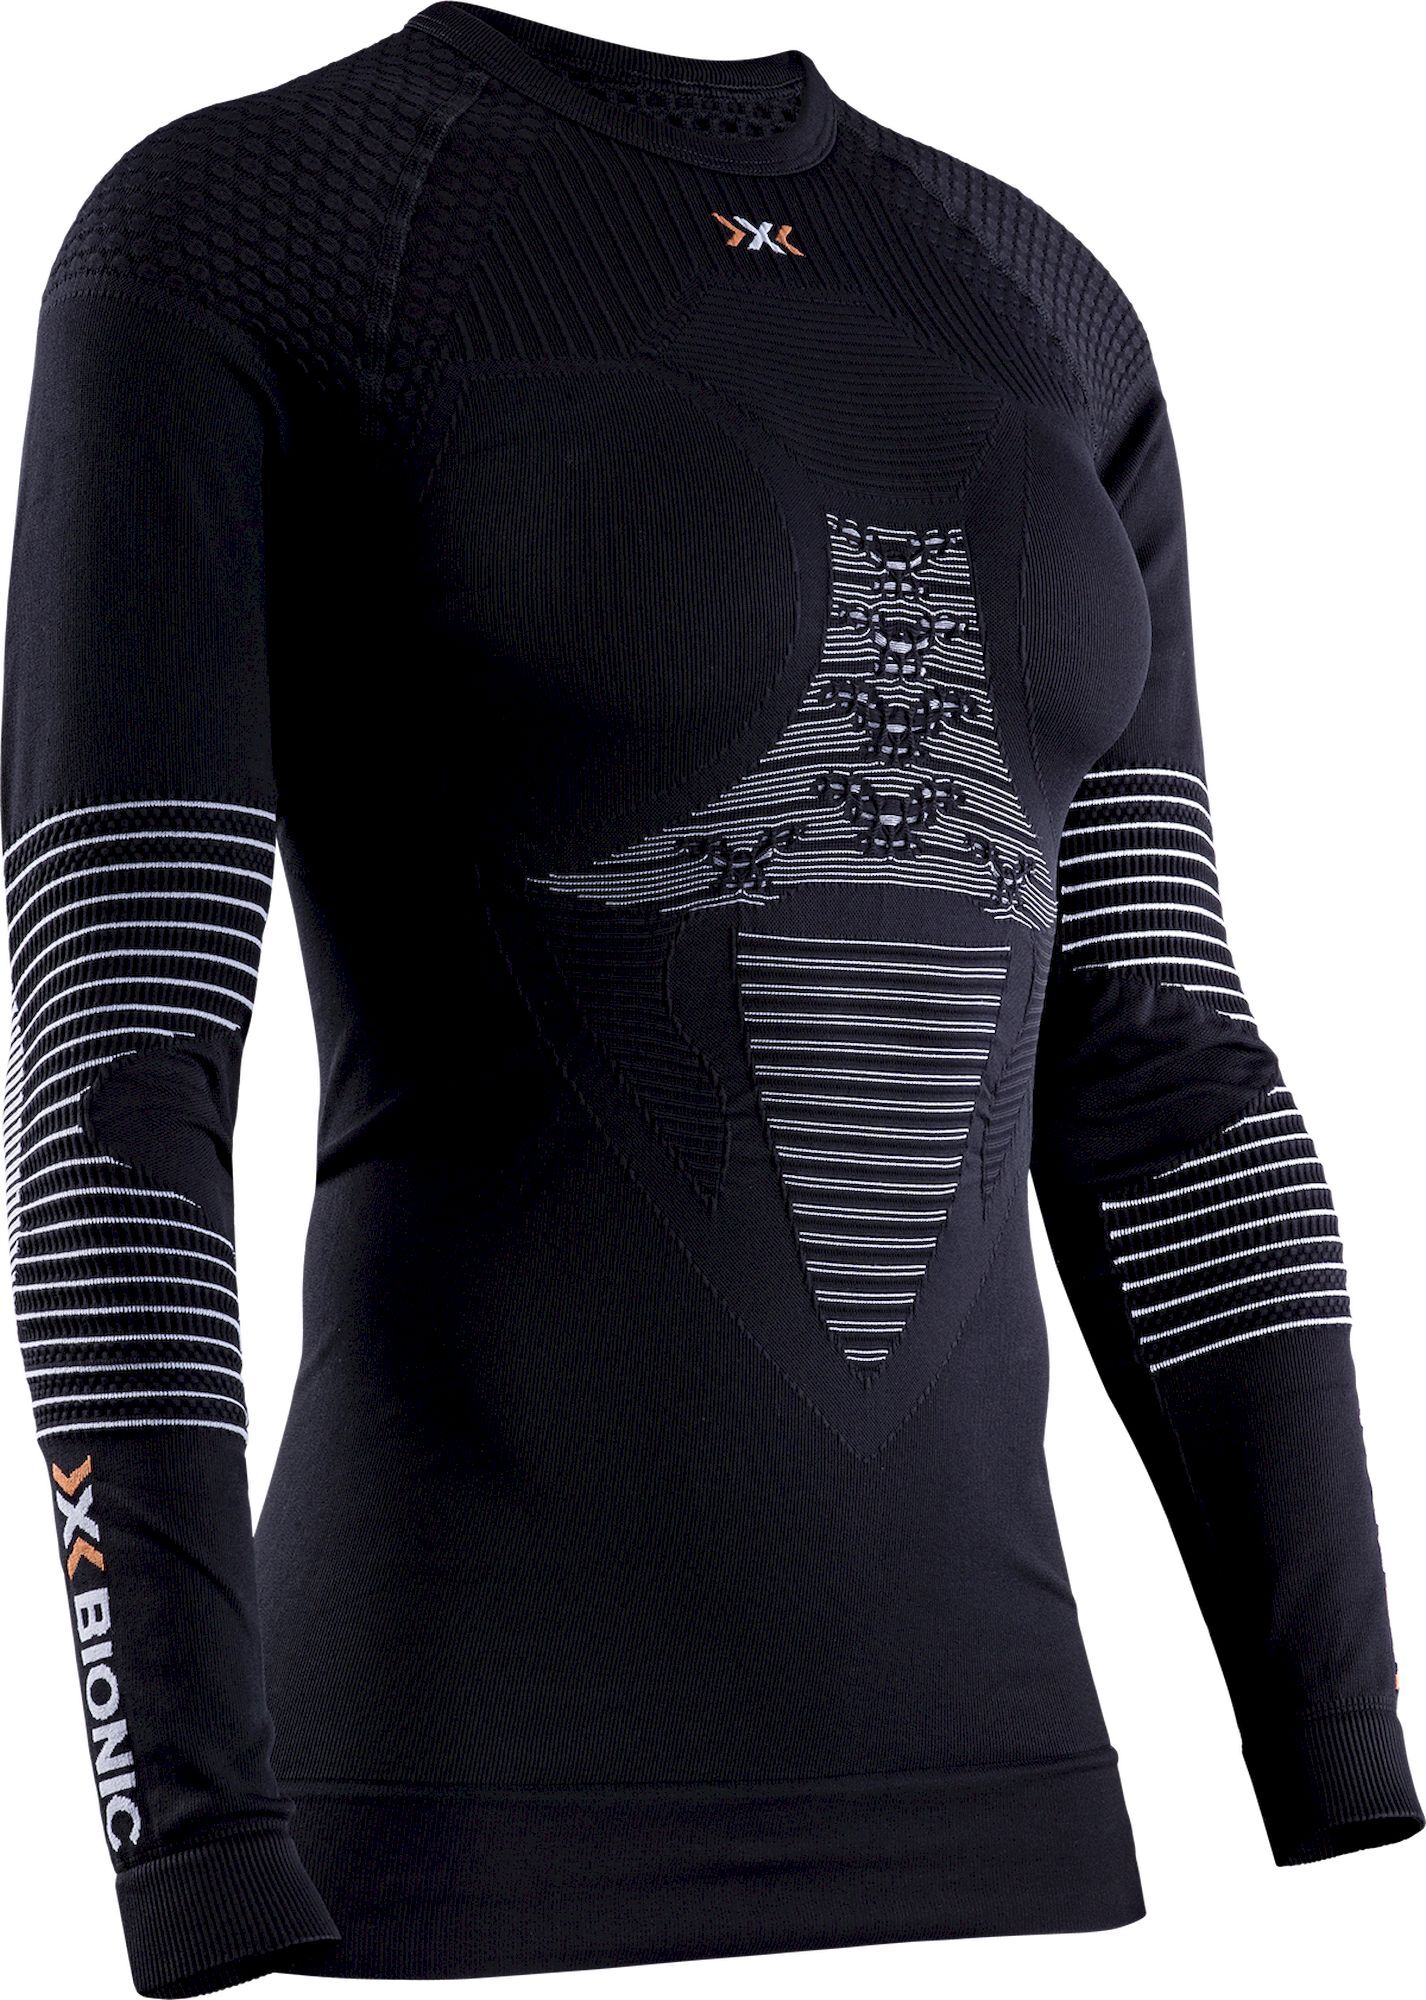 X-Bionic Energizer 4.0 Shirt Long Sleeve - Syntetisk undertøj - Damer